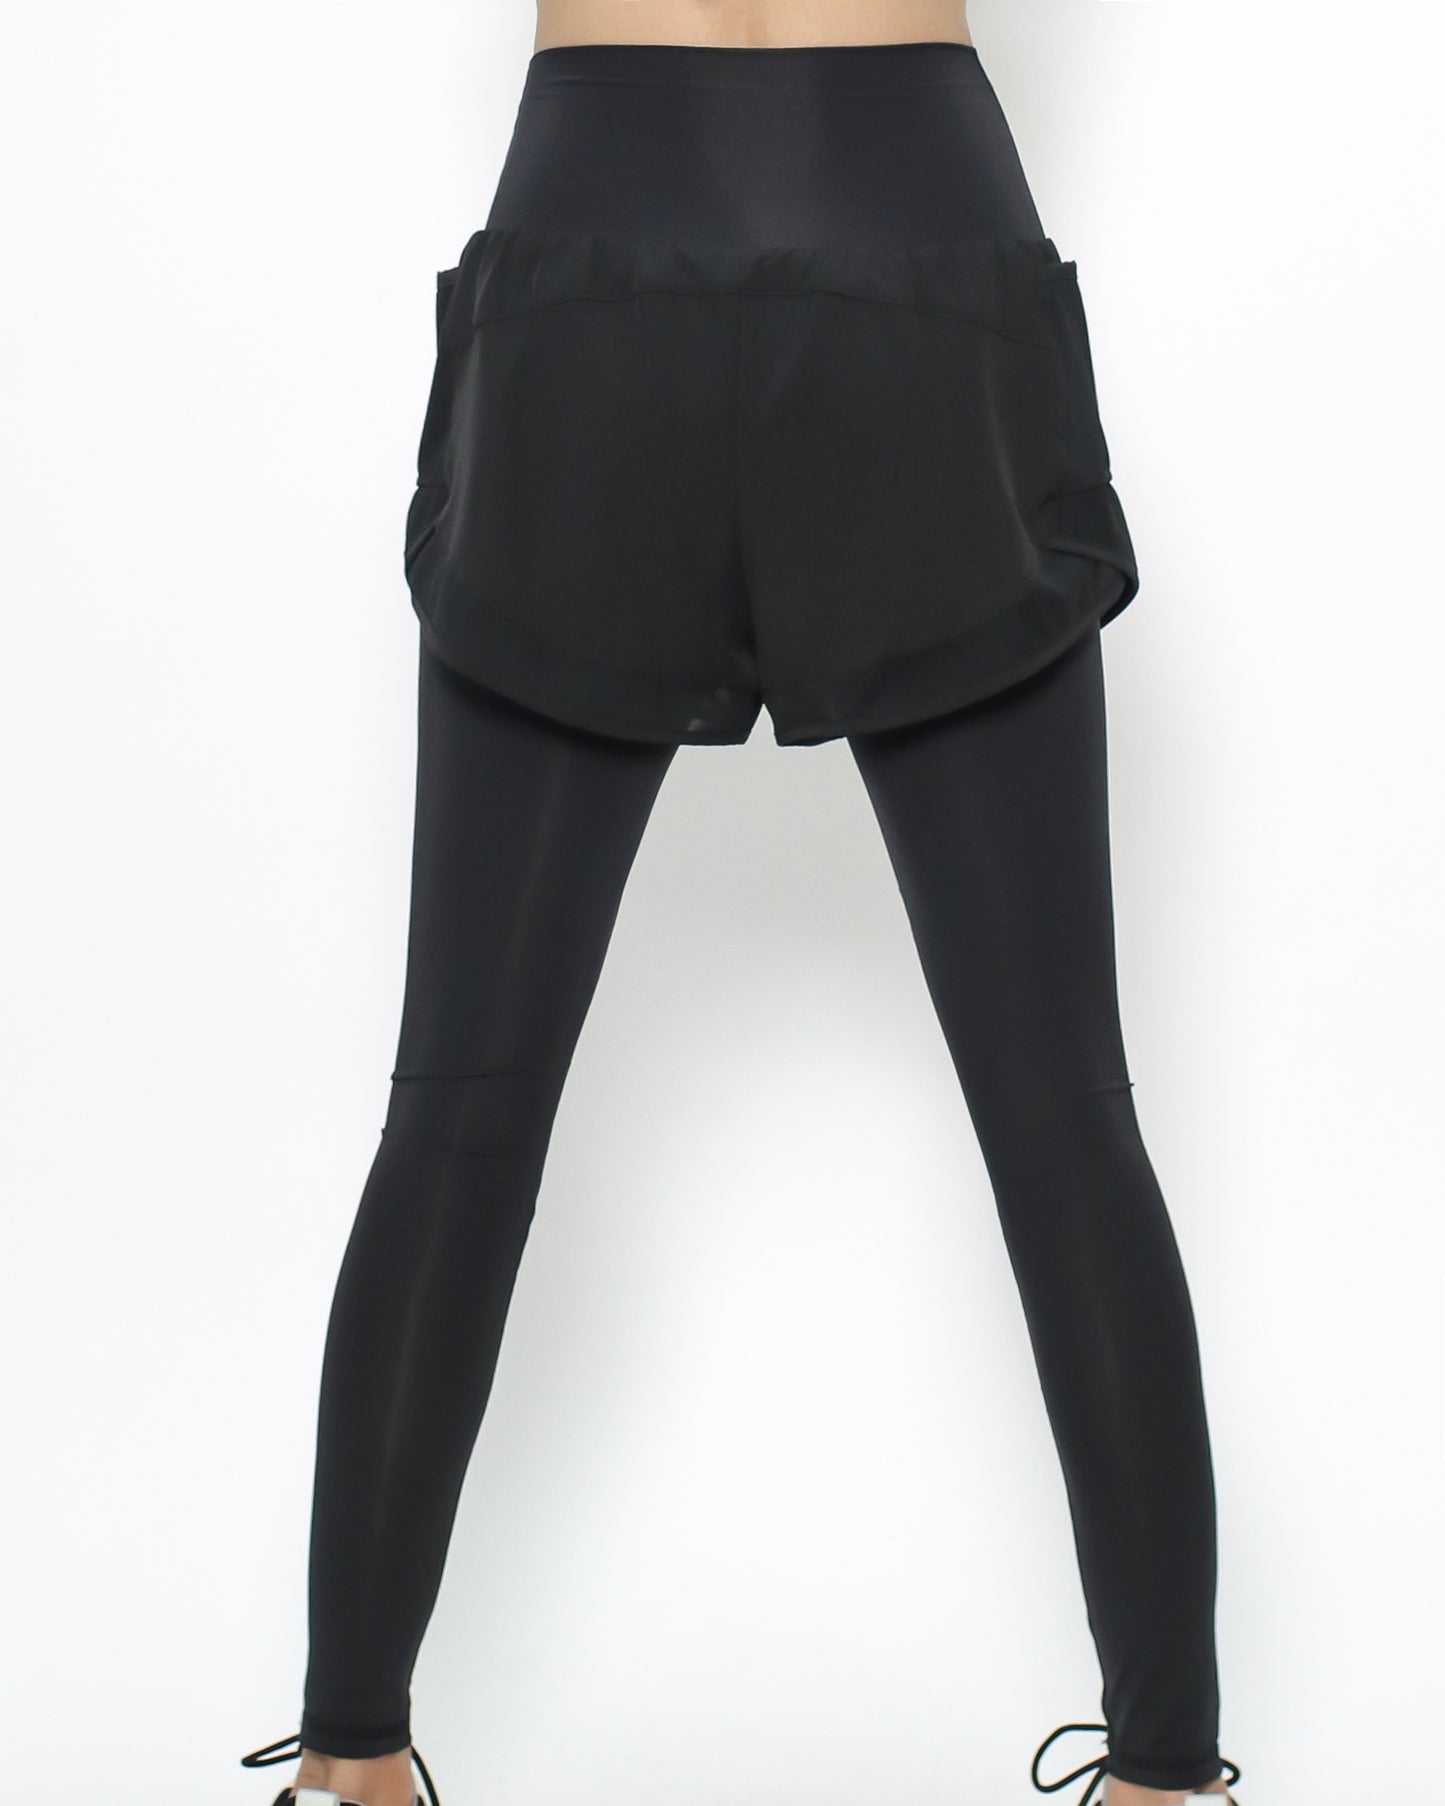 black mesh shorts & sports long leggings *pre-order*